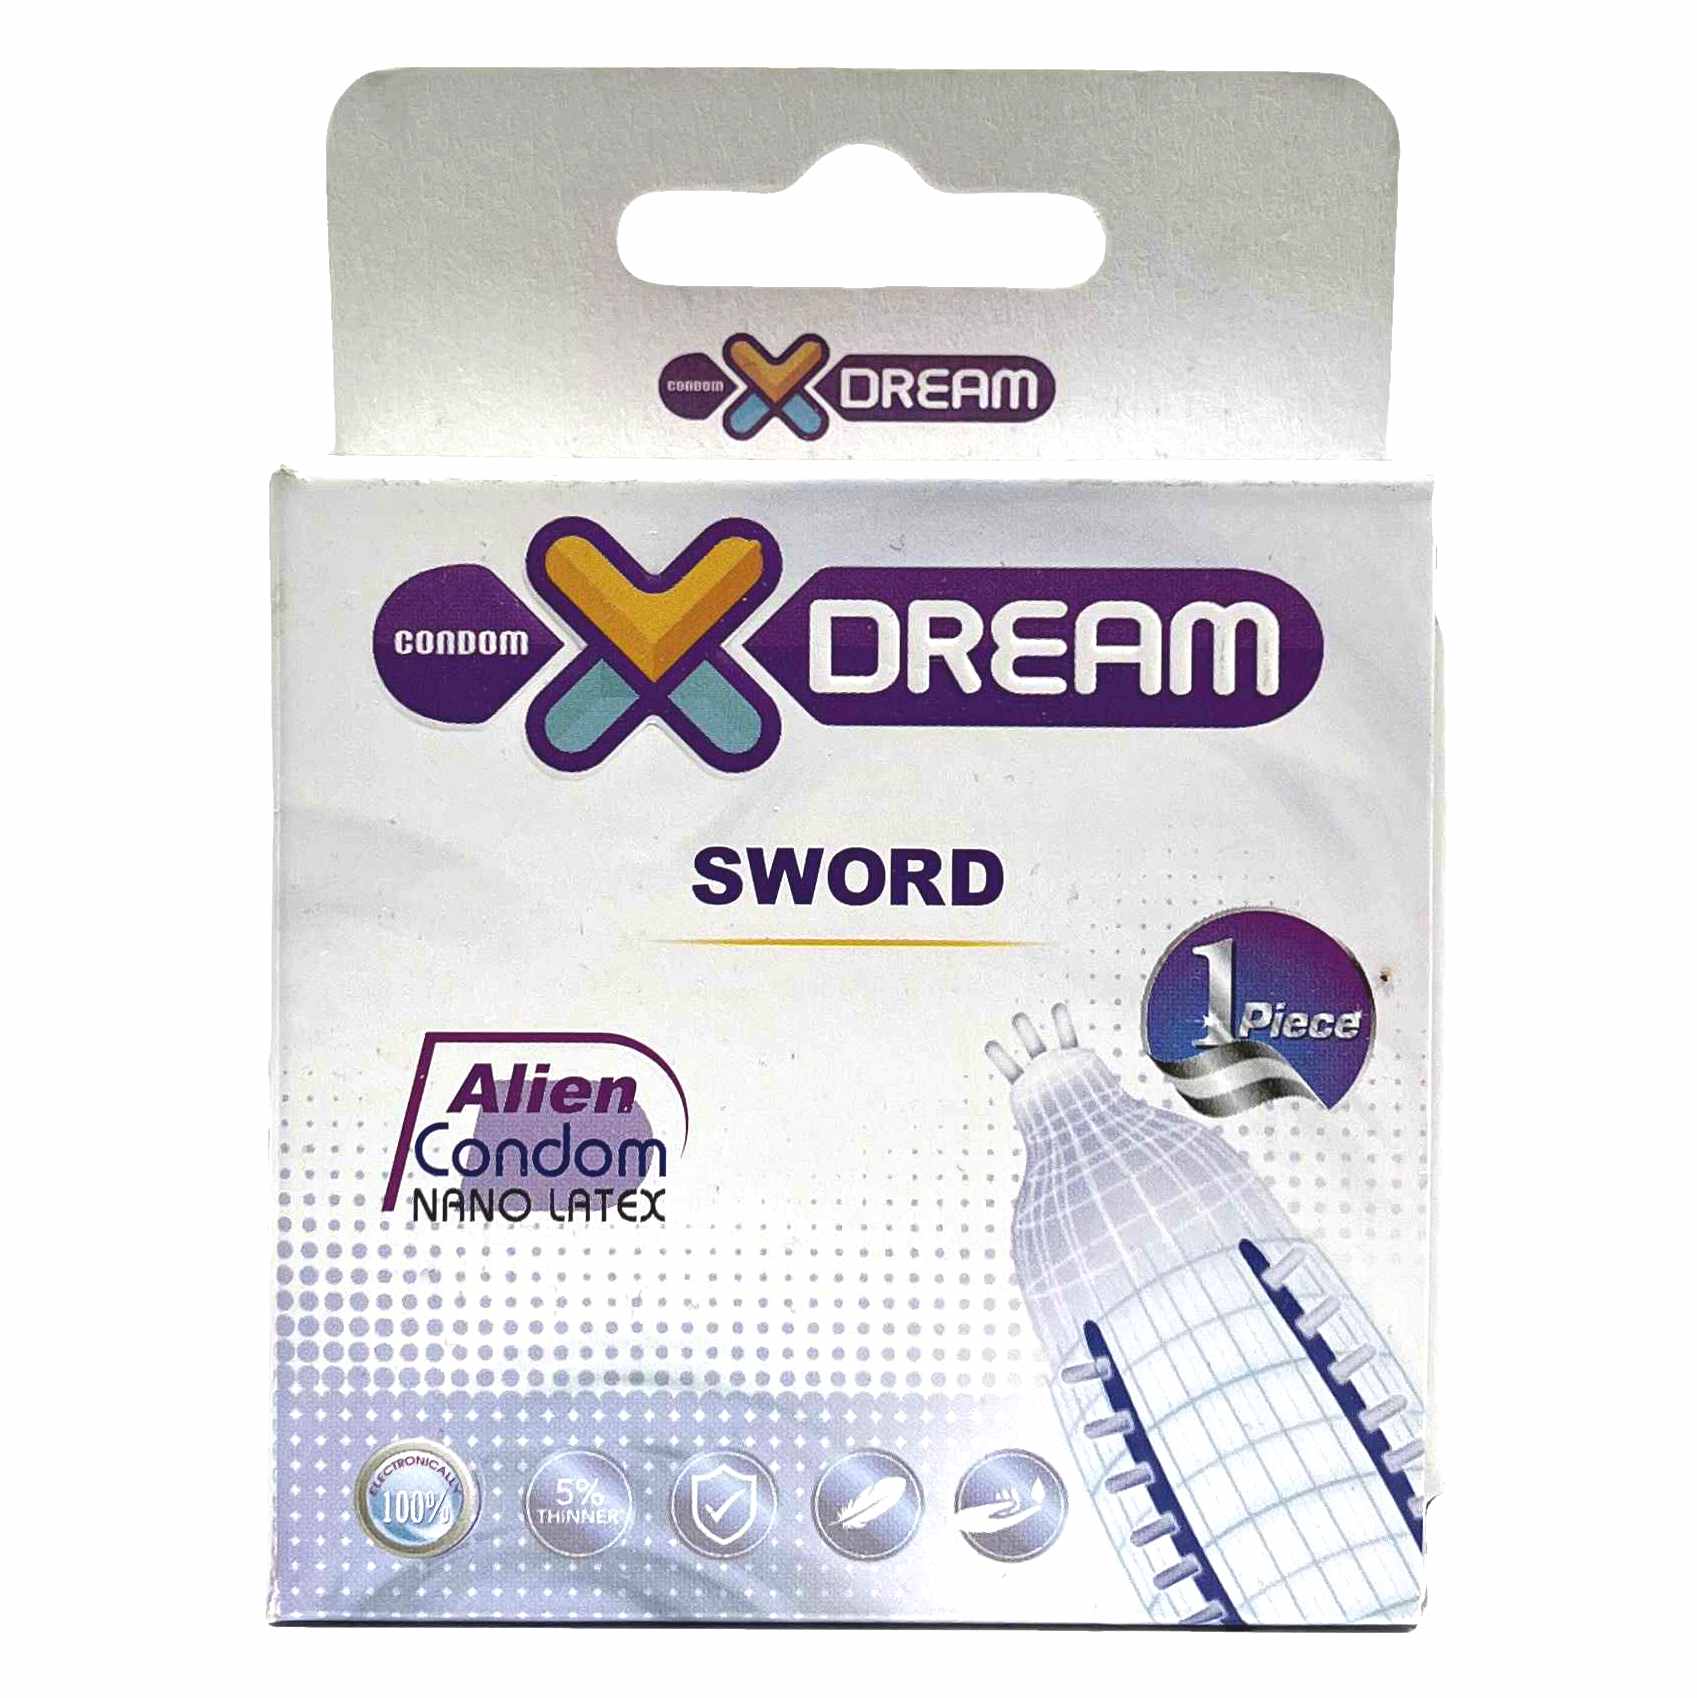 کاندوم فضایی شمشیری ایکس دریم XDream Sword